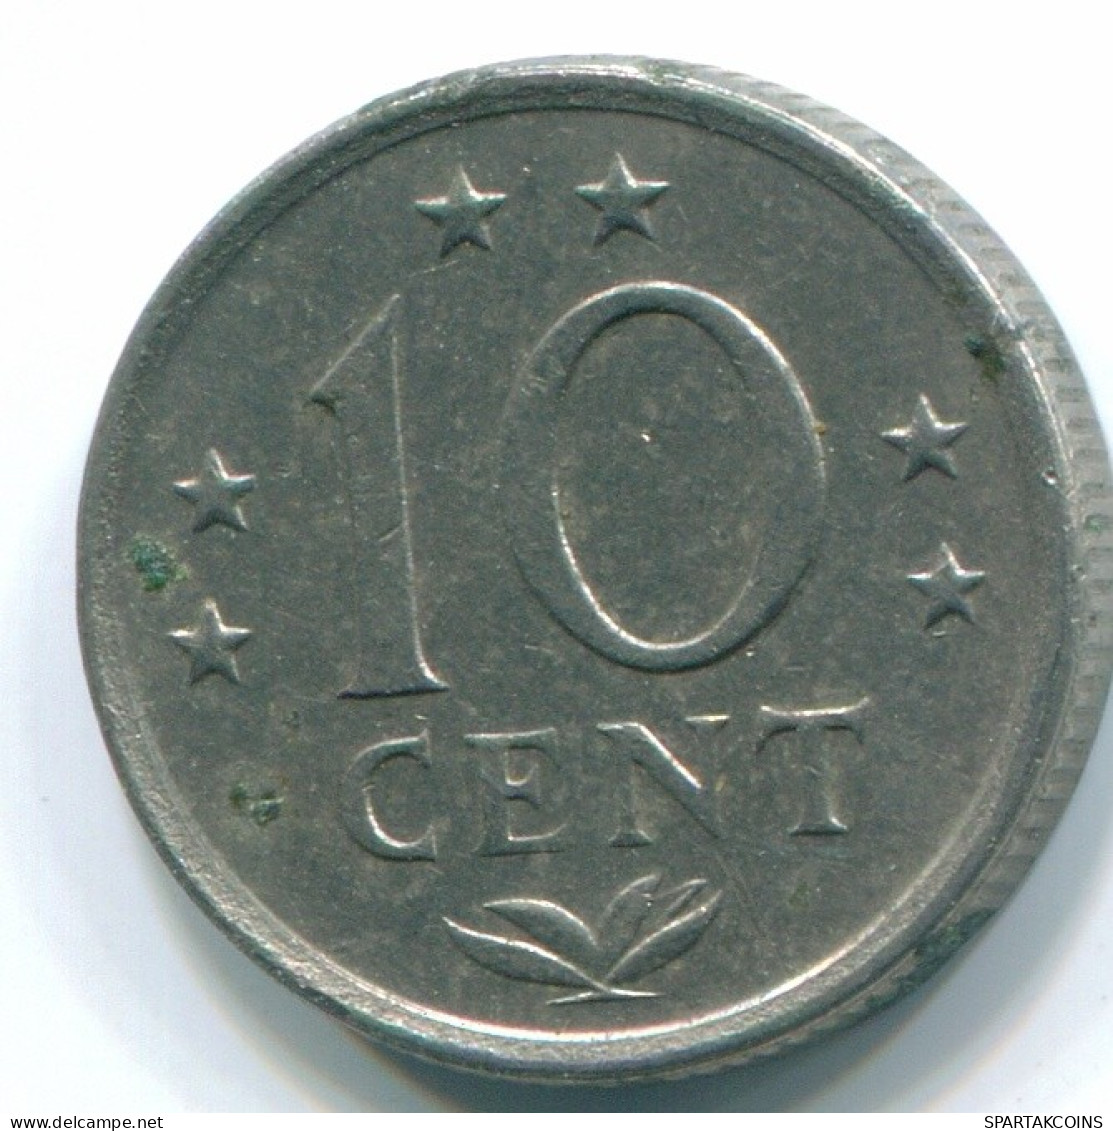 10 CENTS 1970 NETHERLANDS ANTILLES Nickel Colonial Coin #S13363.U.A - Antilles Néerlandaises